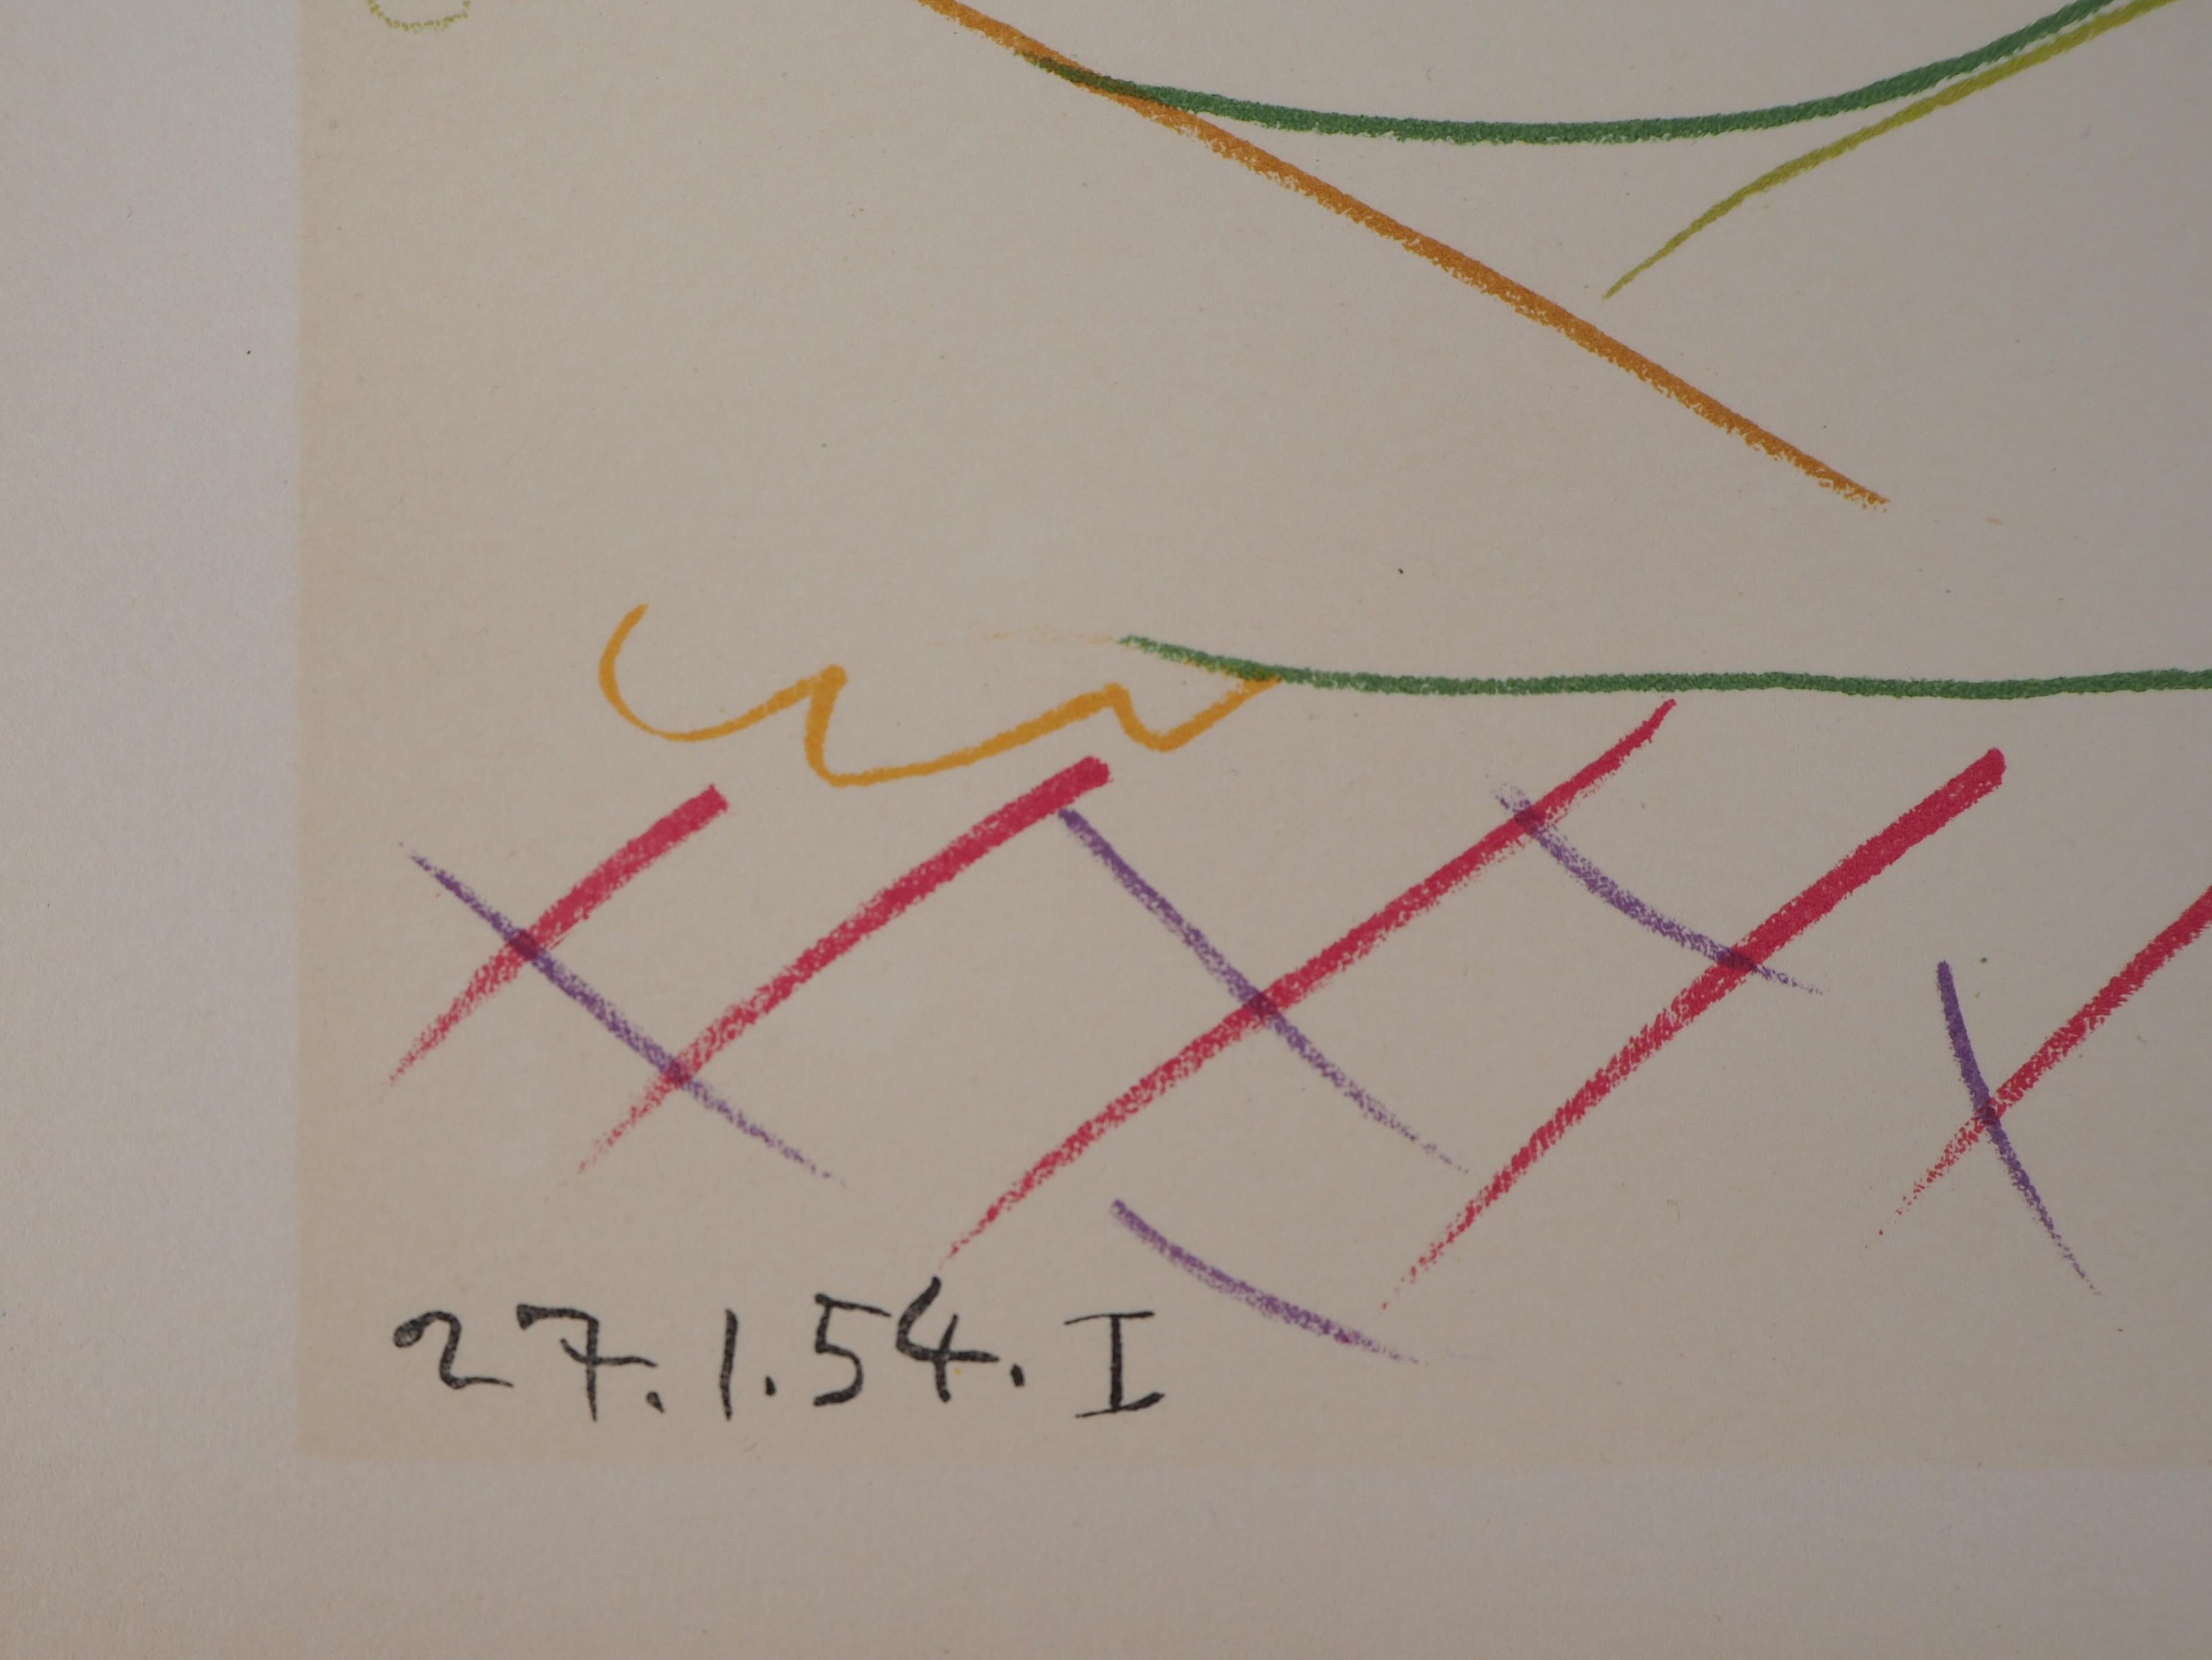 From the Suite de 180 Dessins - Lithograph - Verve, Mourlot  - Modern Print by (after) Pablo Picasso